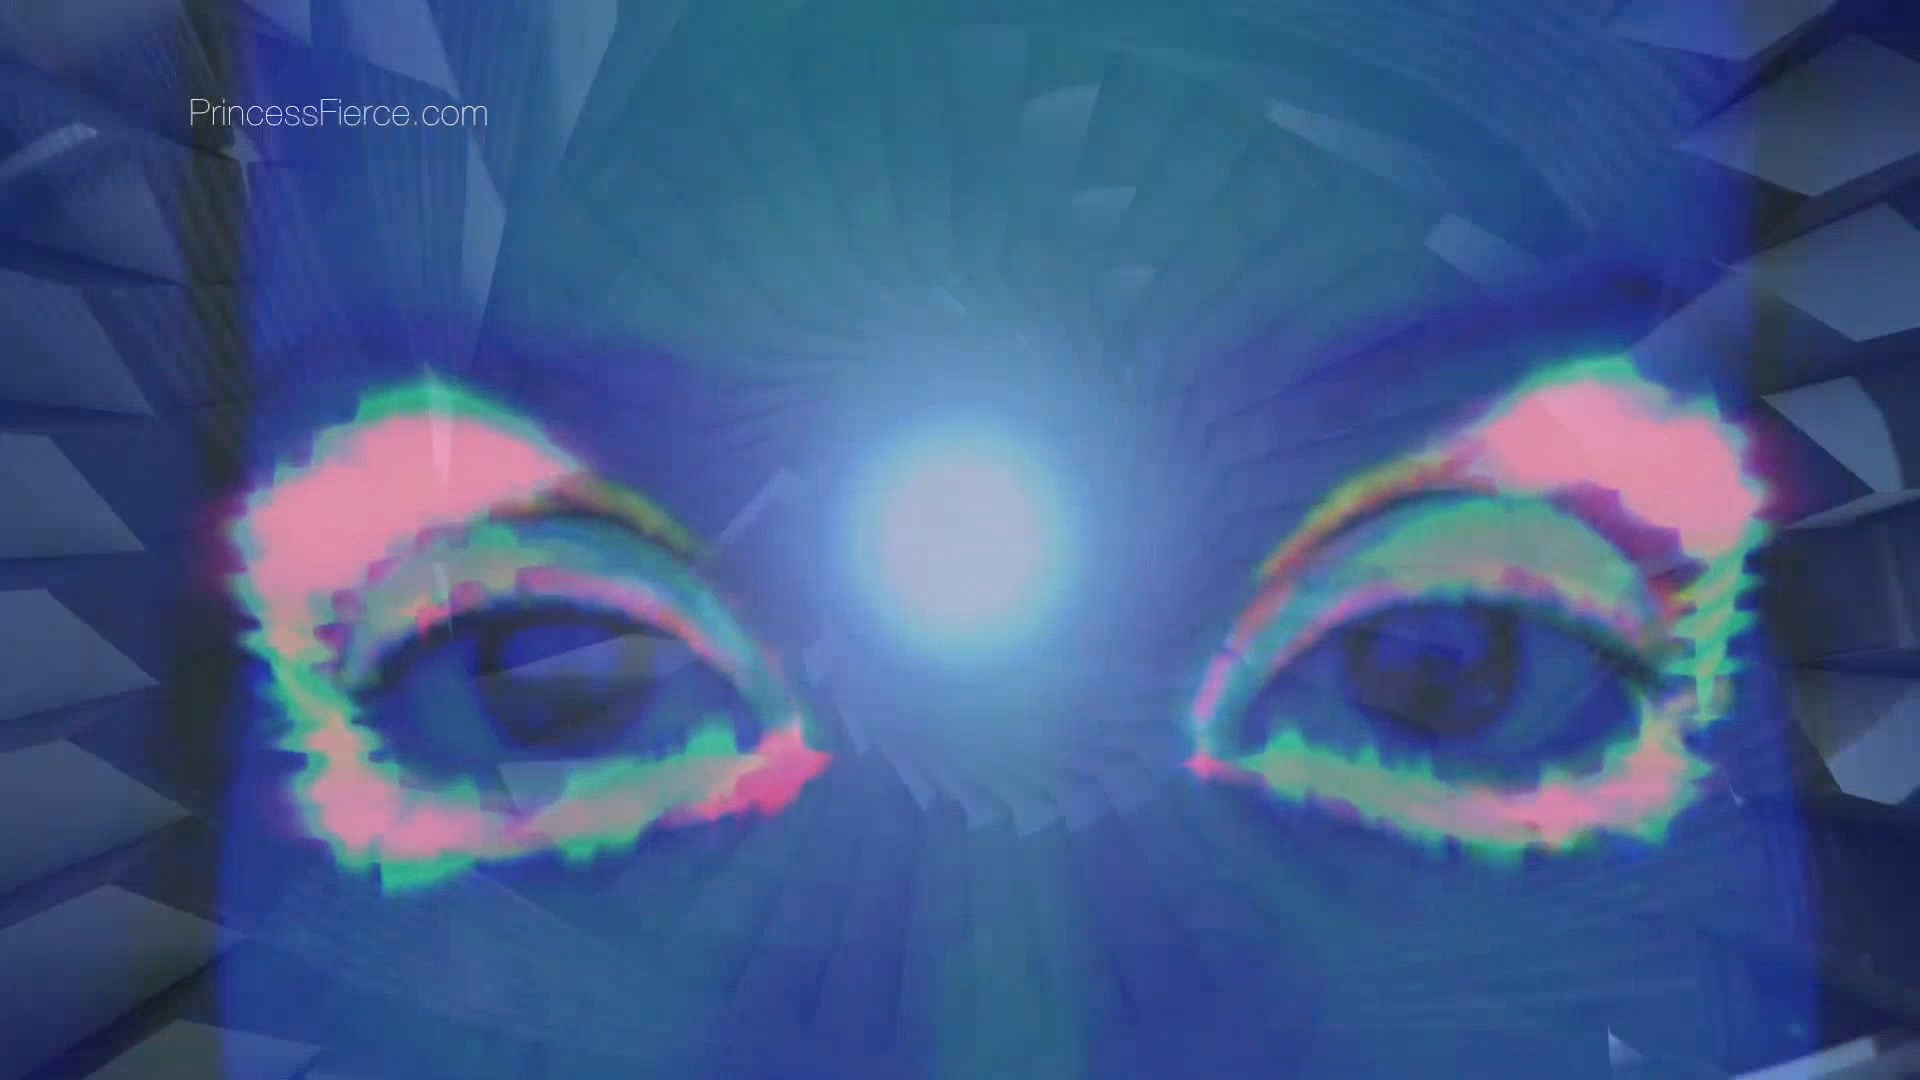 The Third Eye 1080p - Princess Fierce